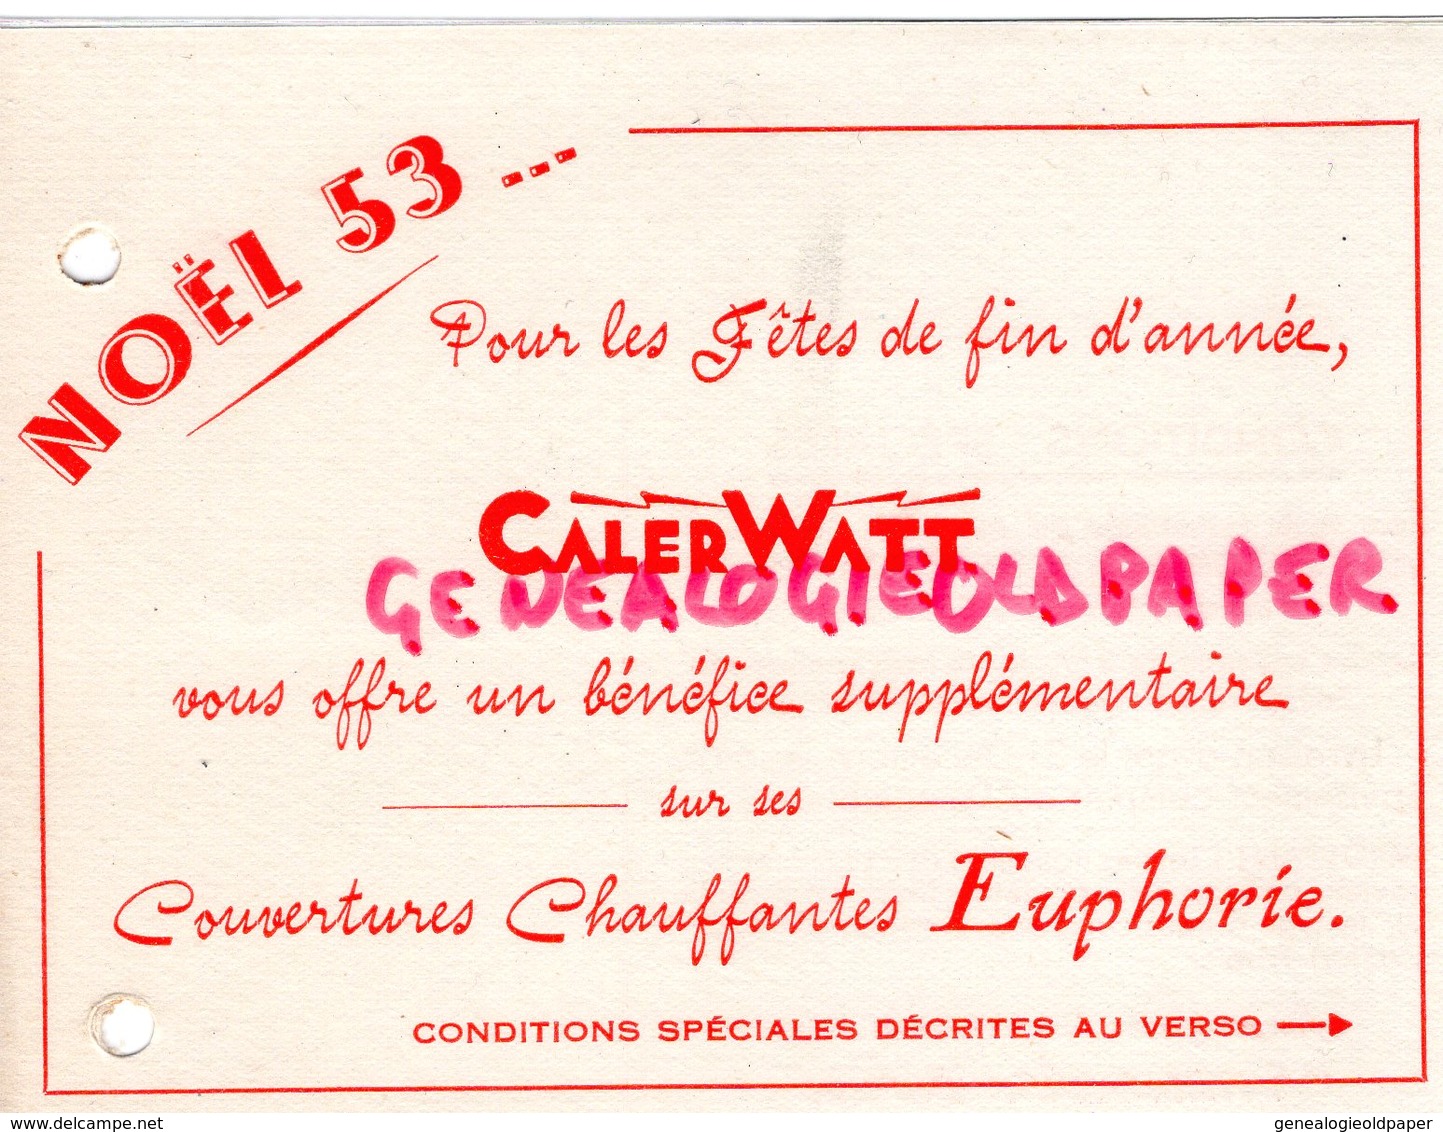 86- POITIERS - RARE CARTON PUBLICITAIRE CALERWATT- NOEL 1953- COUVERTURES CHAUFFANTES EUPHORIE - Advertising